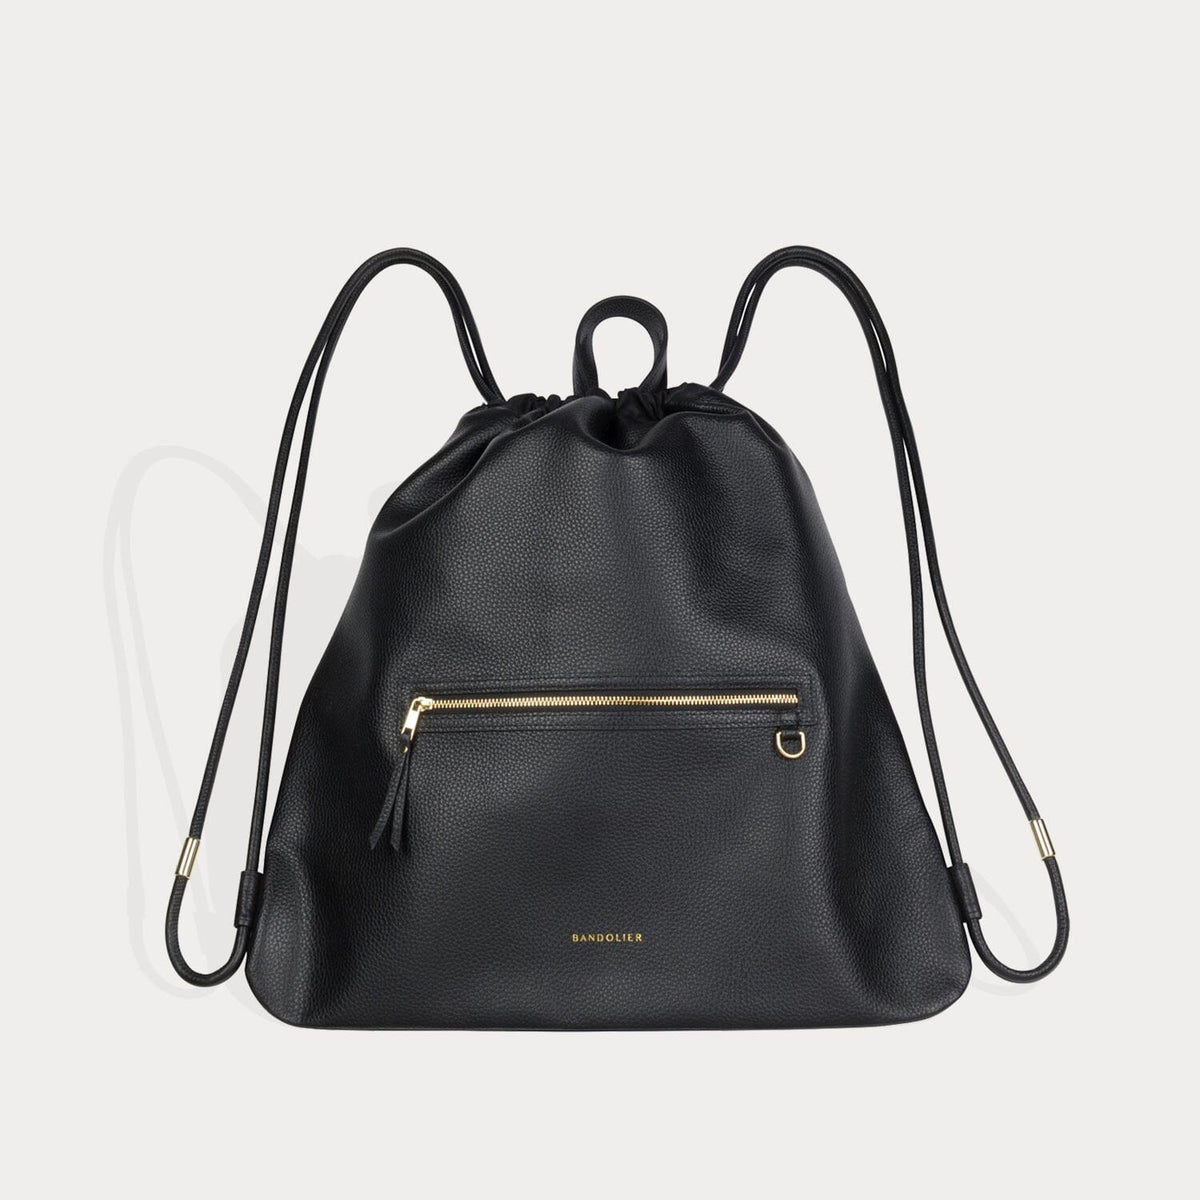 Speedy 25 Vegan Leather Handbag Organizer in Dark Beige Color